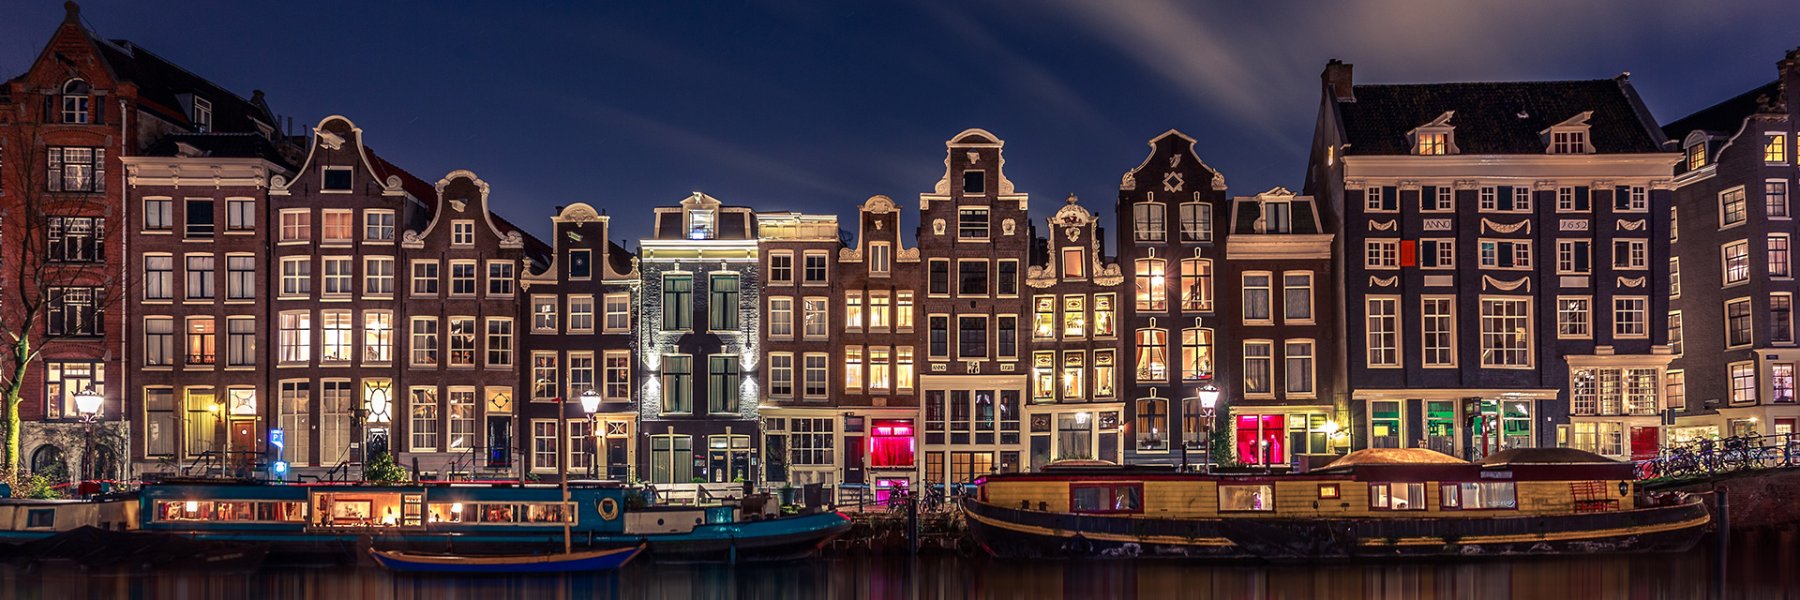 Luxuriöse Ferienhäuser in Holland